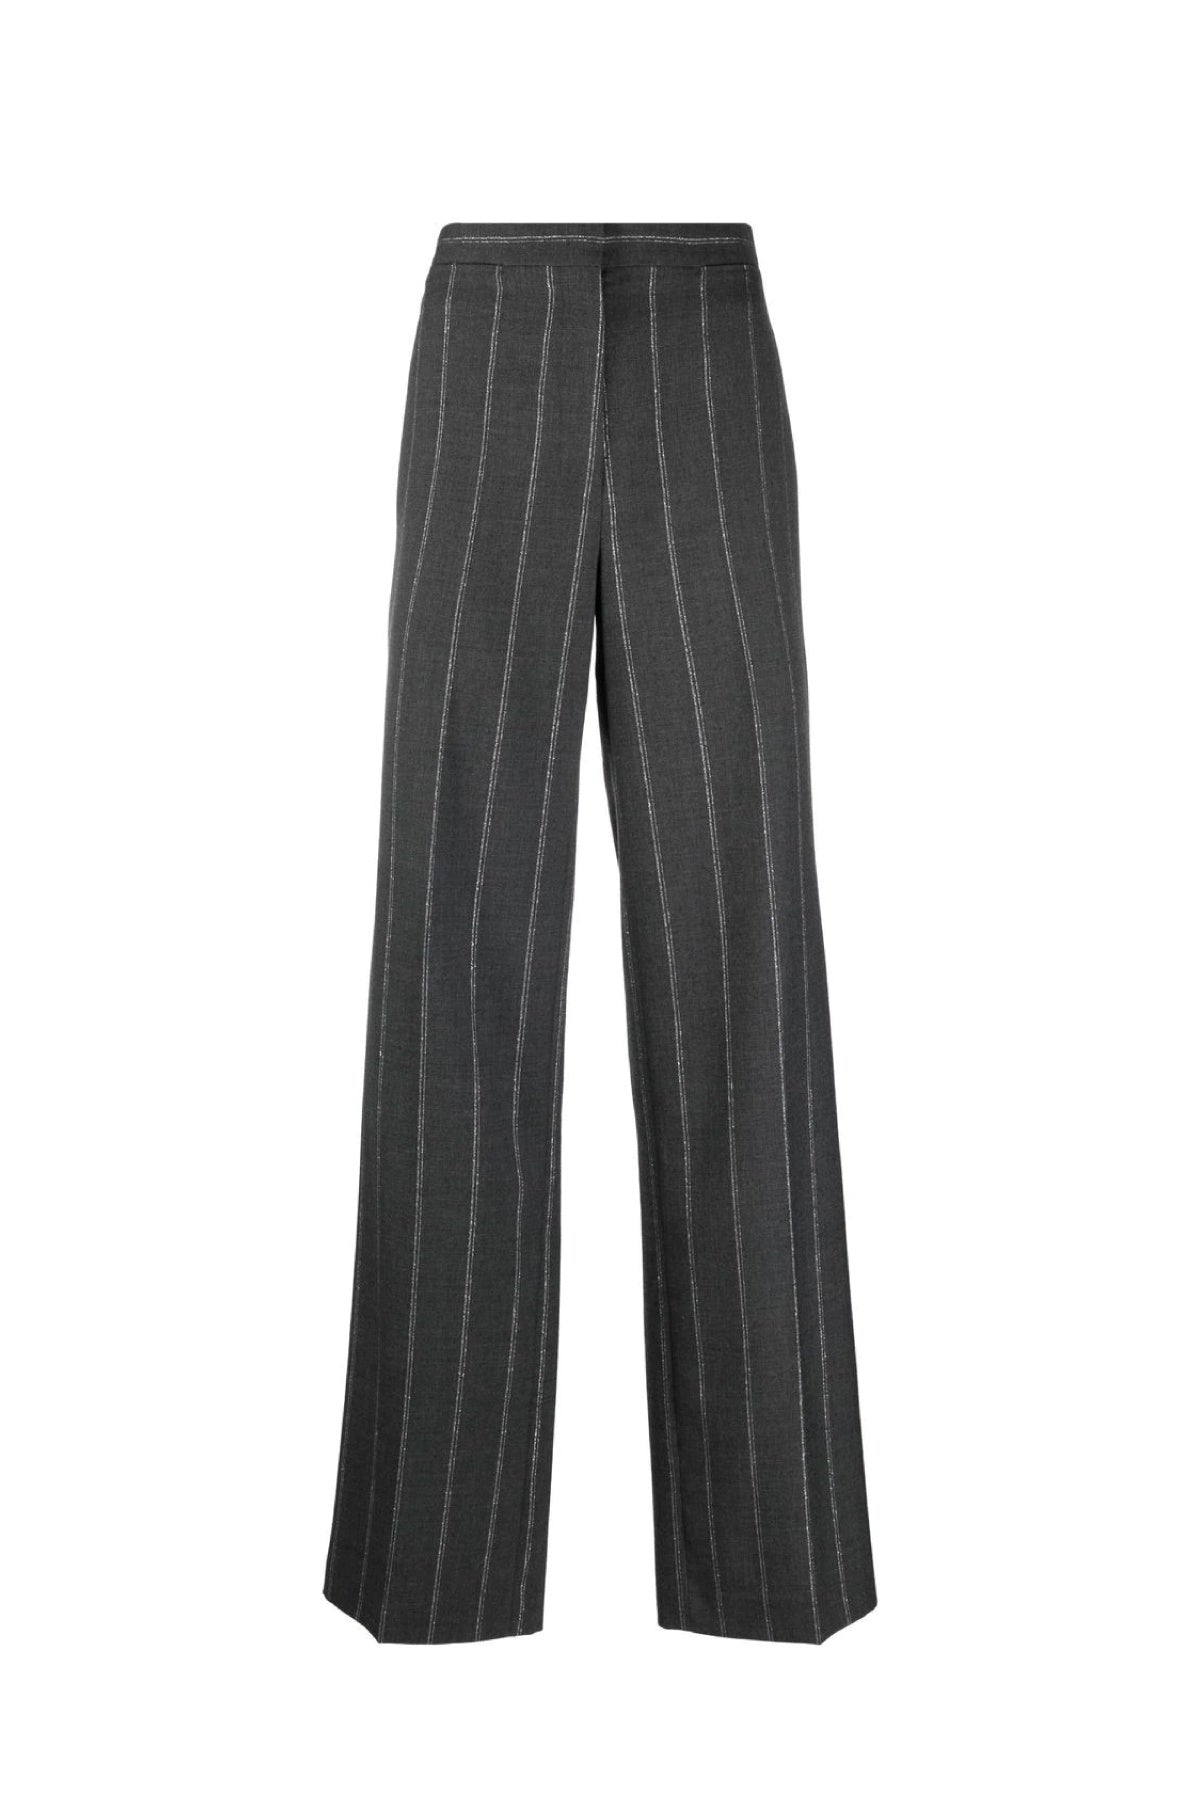 Stella McCartney Striped Tailored Trouser - Grey Melange